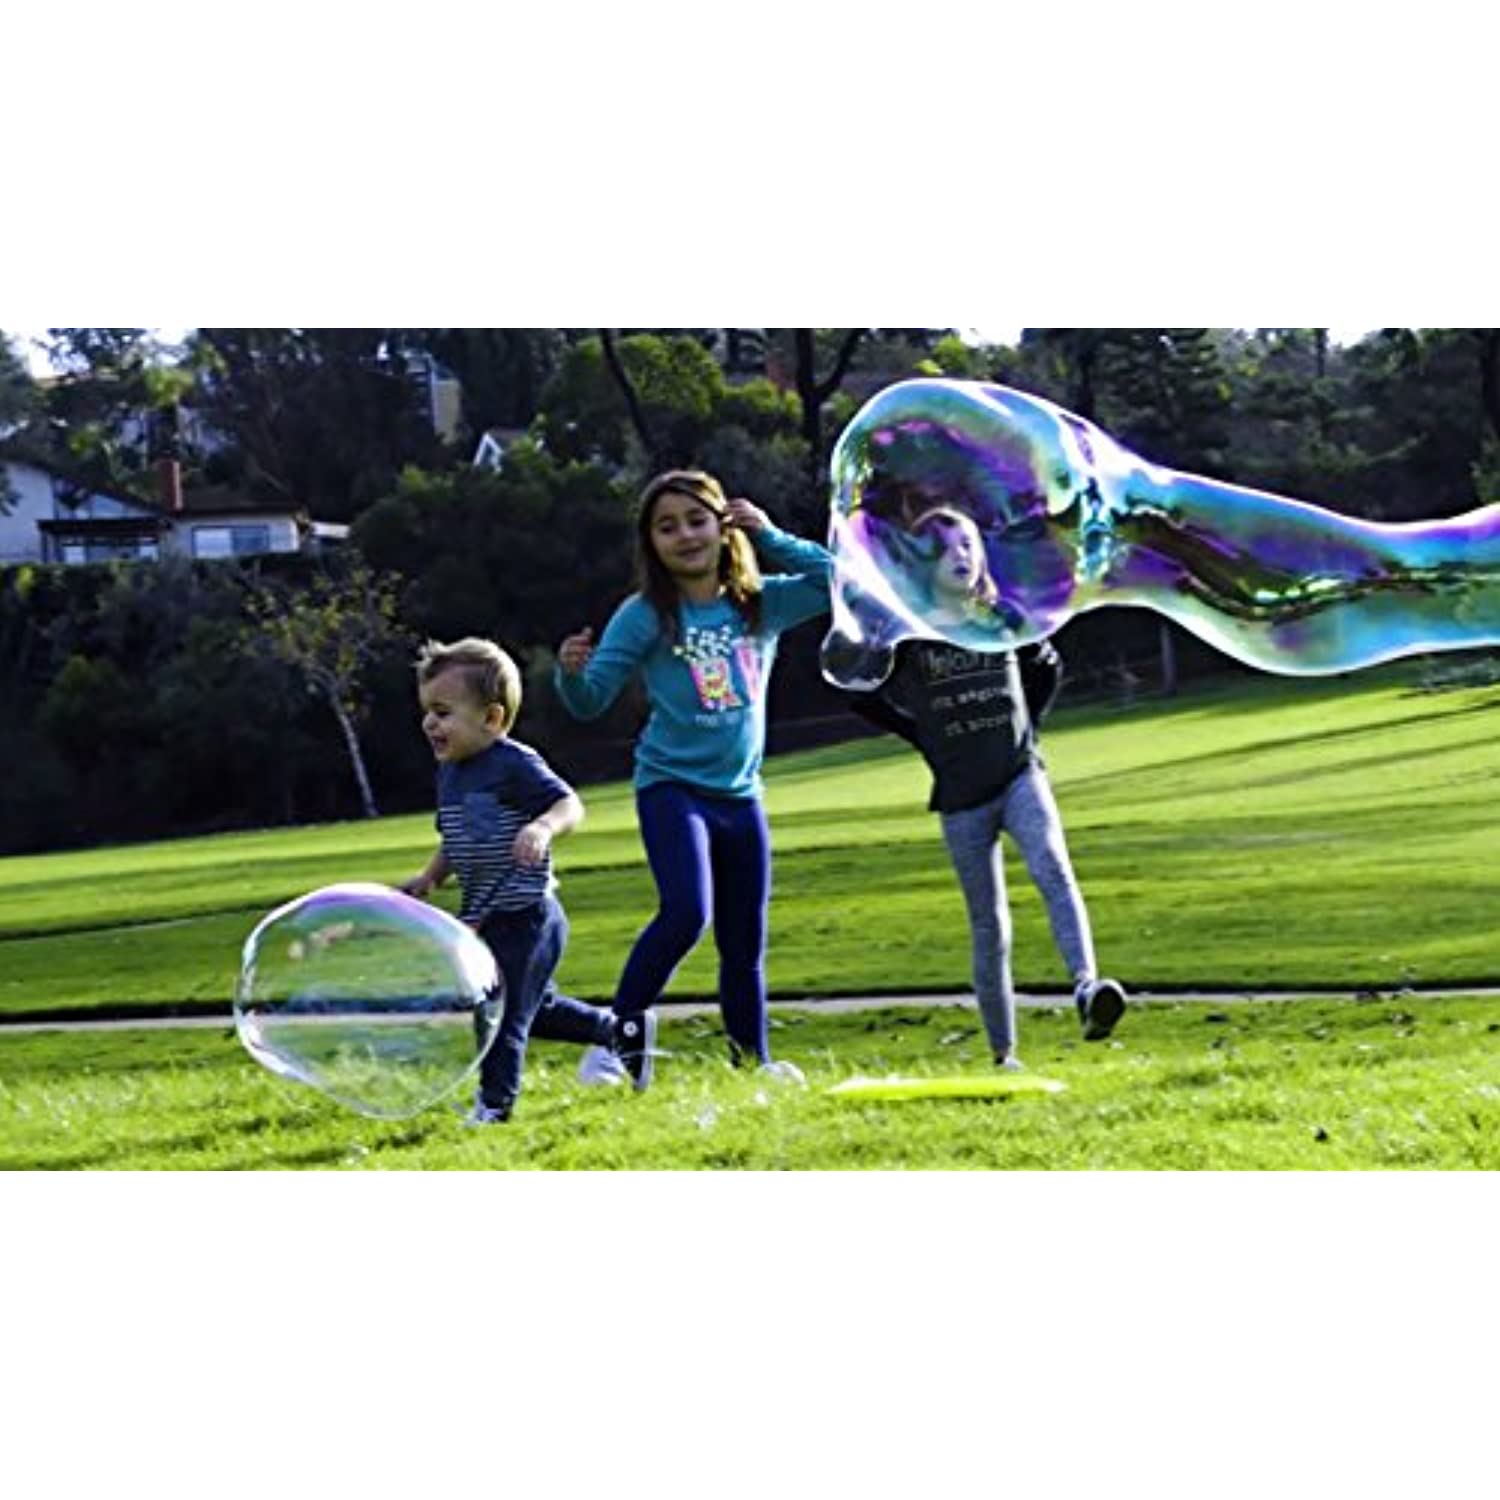 Little Kids - SUPBUB Super Fubbles Bubble Wand (Colors May Vary)